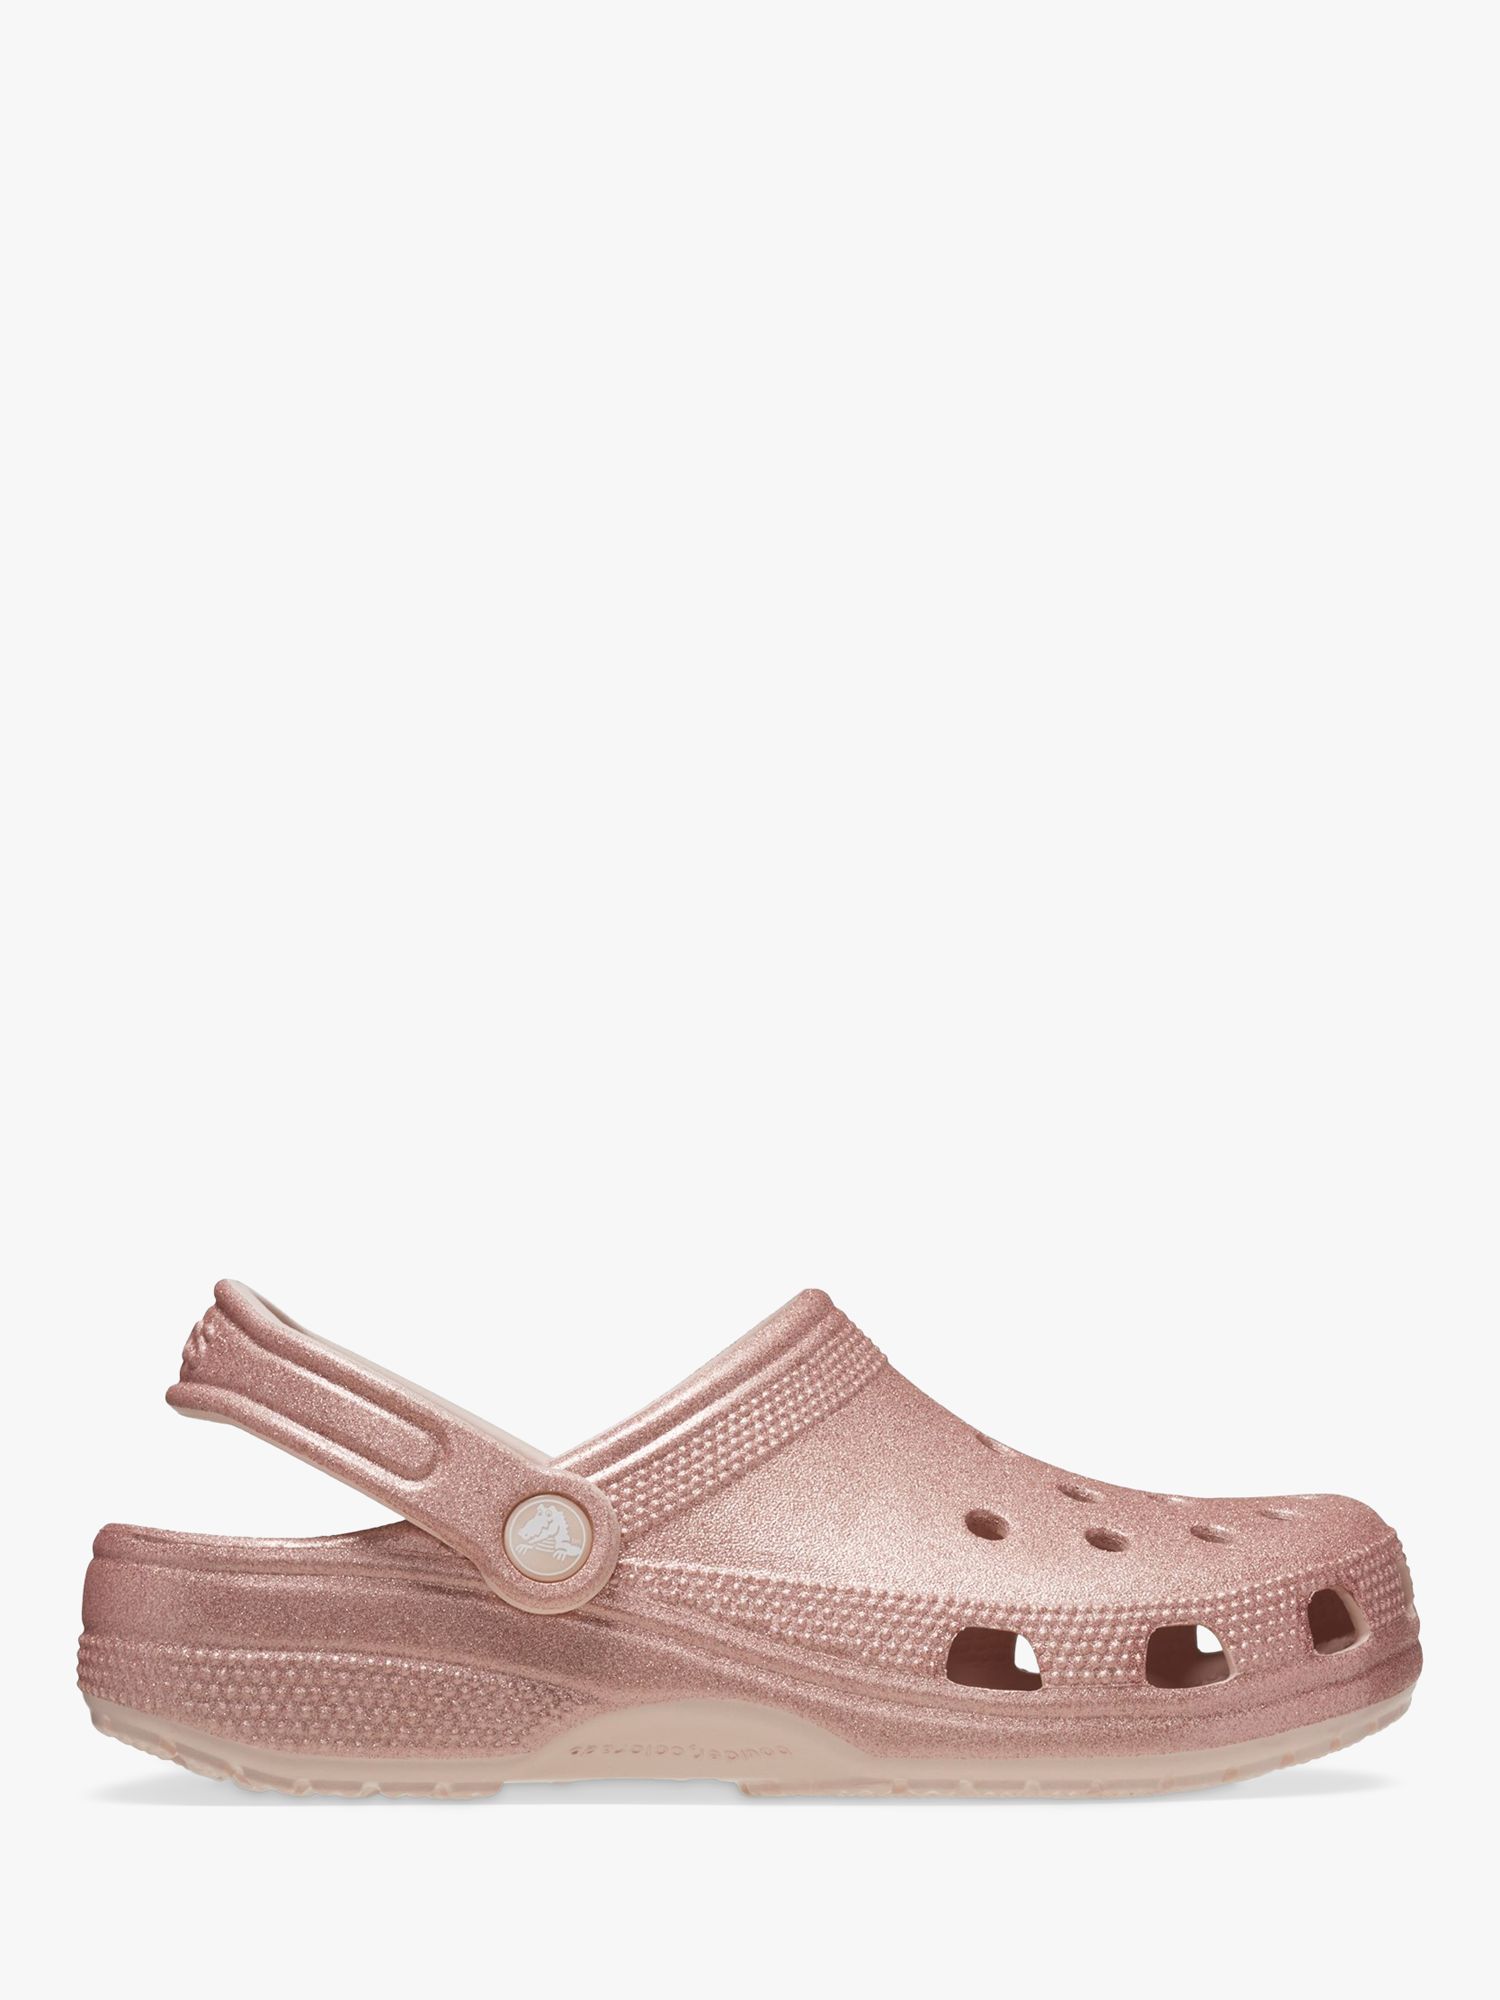 Crocs Classic Glitter Clogs, Light Pink, 5